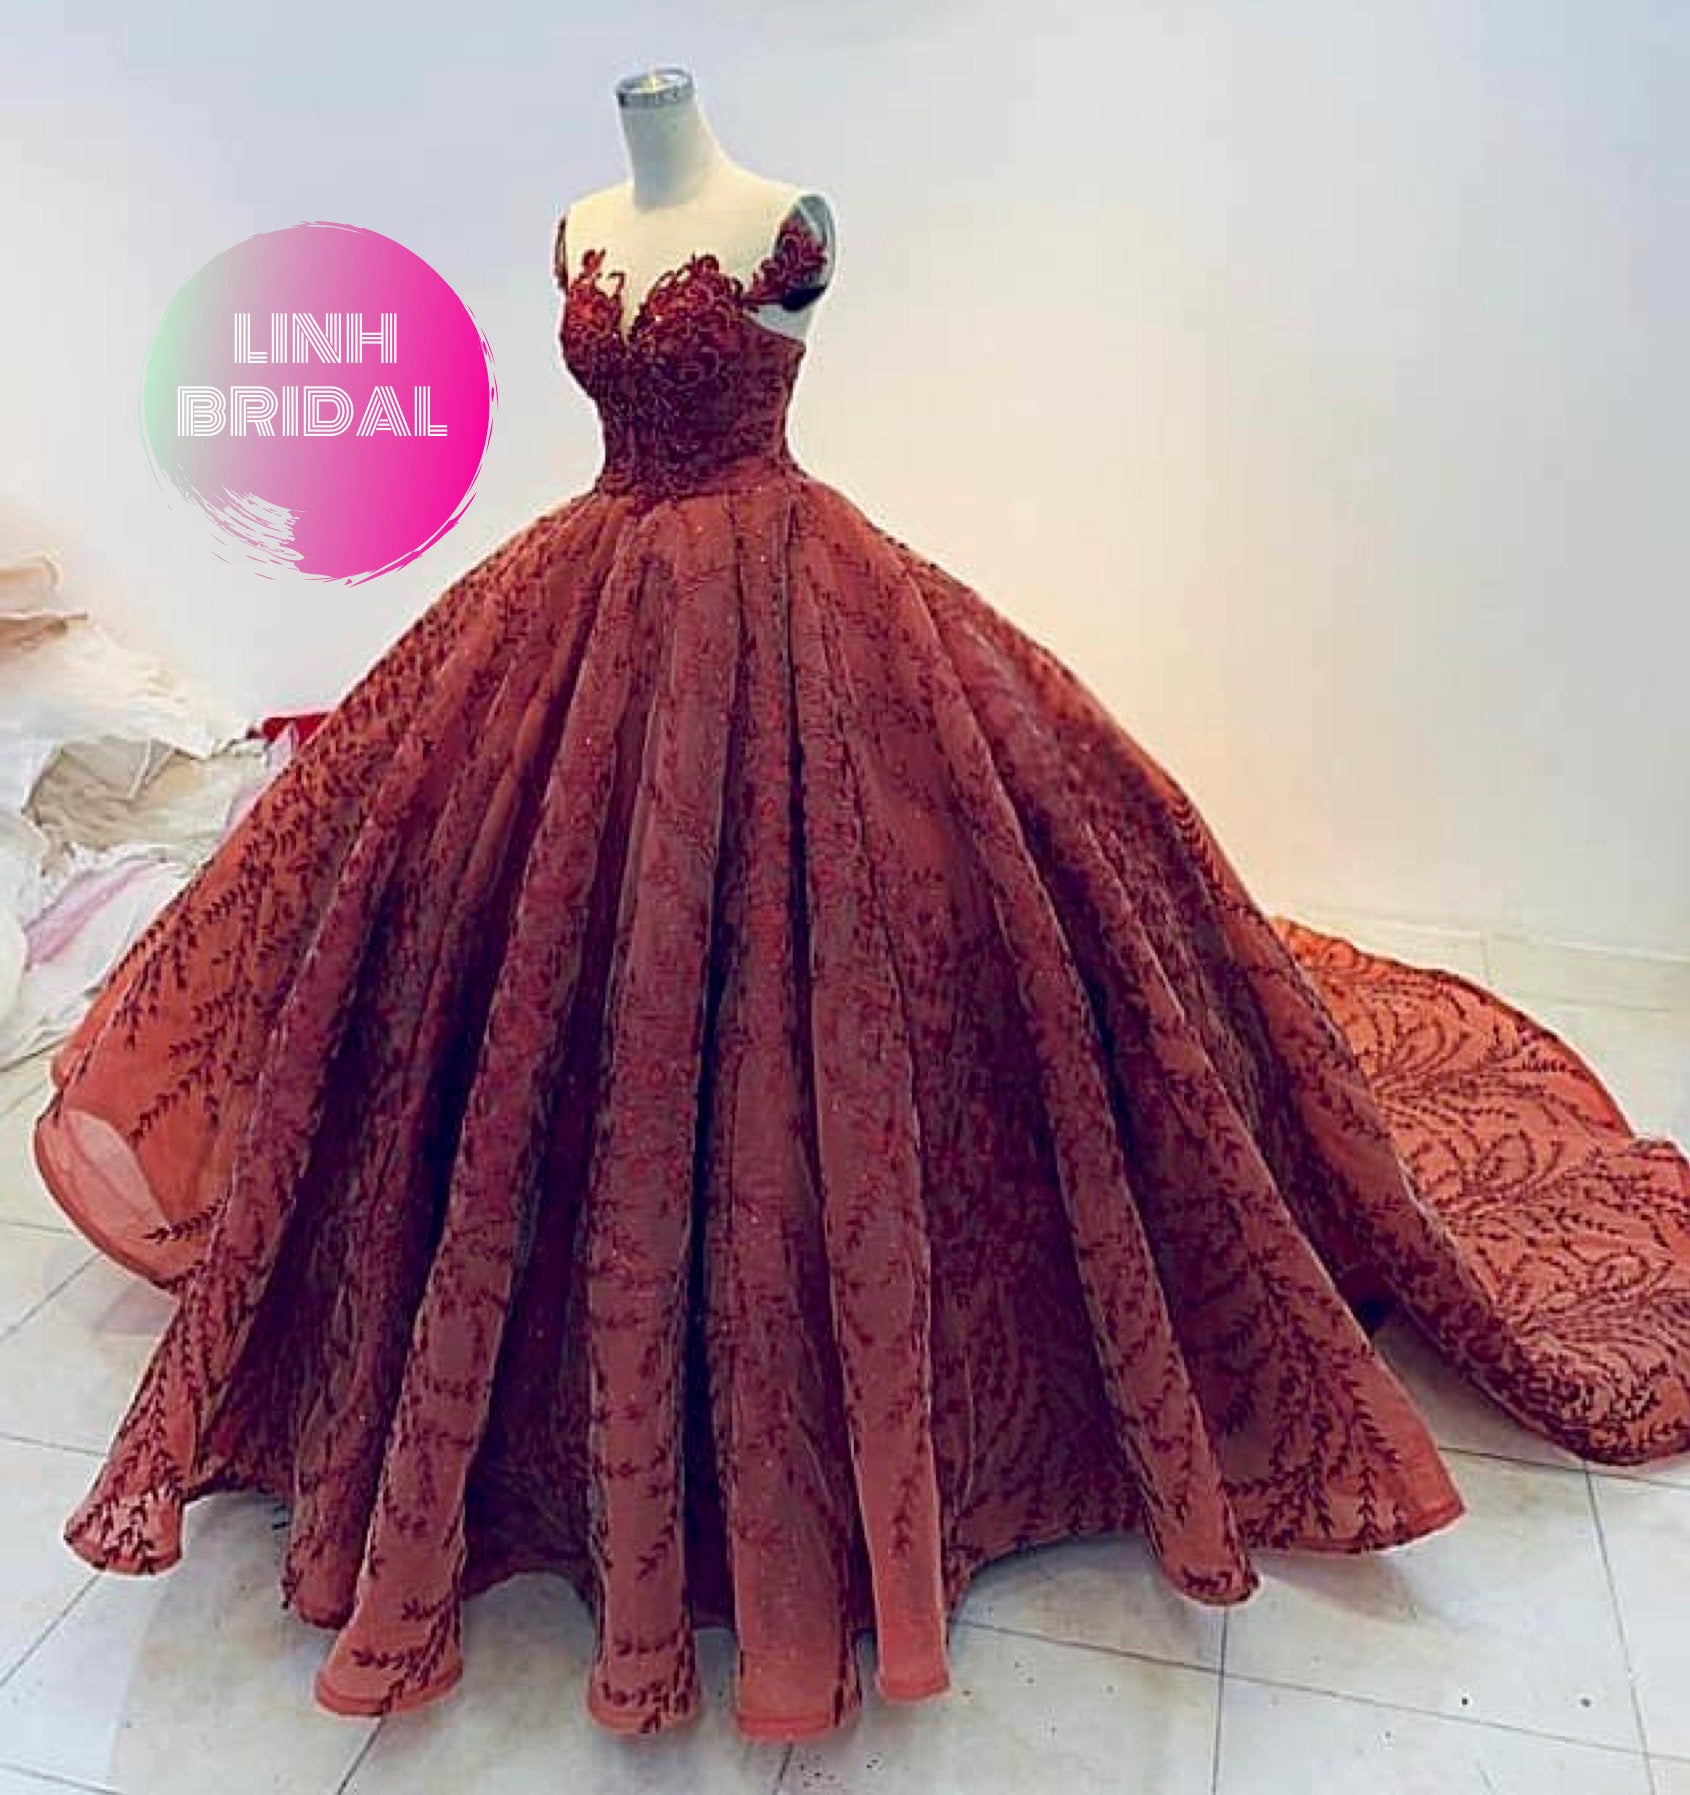 Maroon RawSilk Gown with Zardosi Highlights | Wedding dresses for girls,  Indian wedding gowns, Bride reception dresses